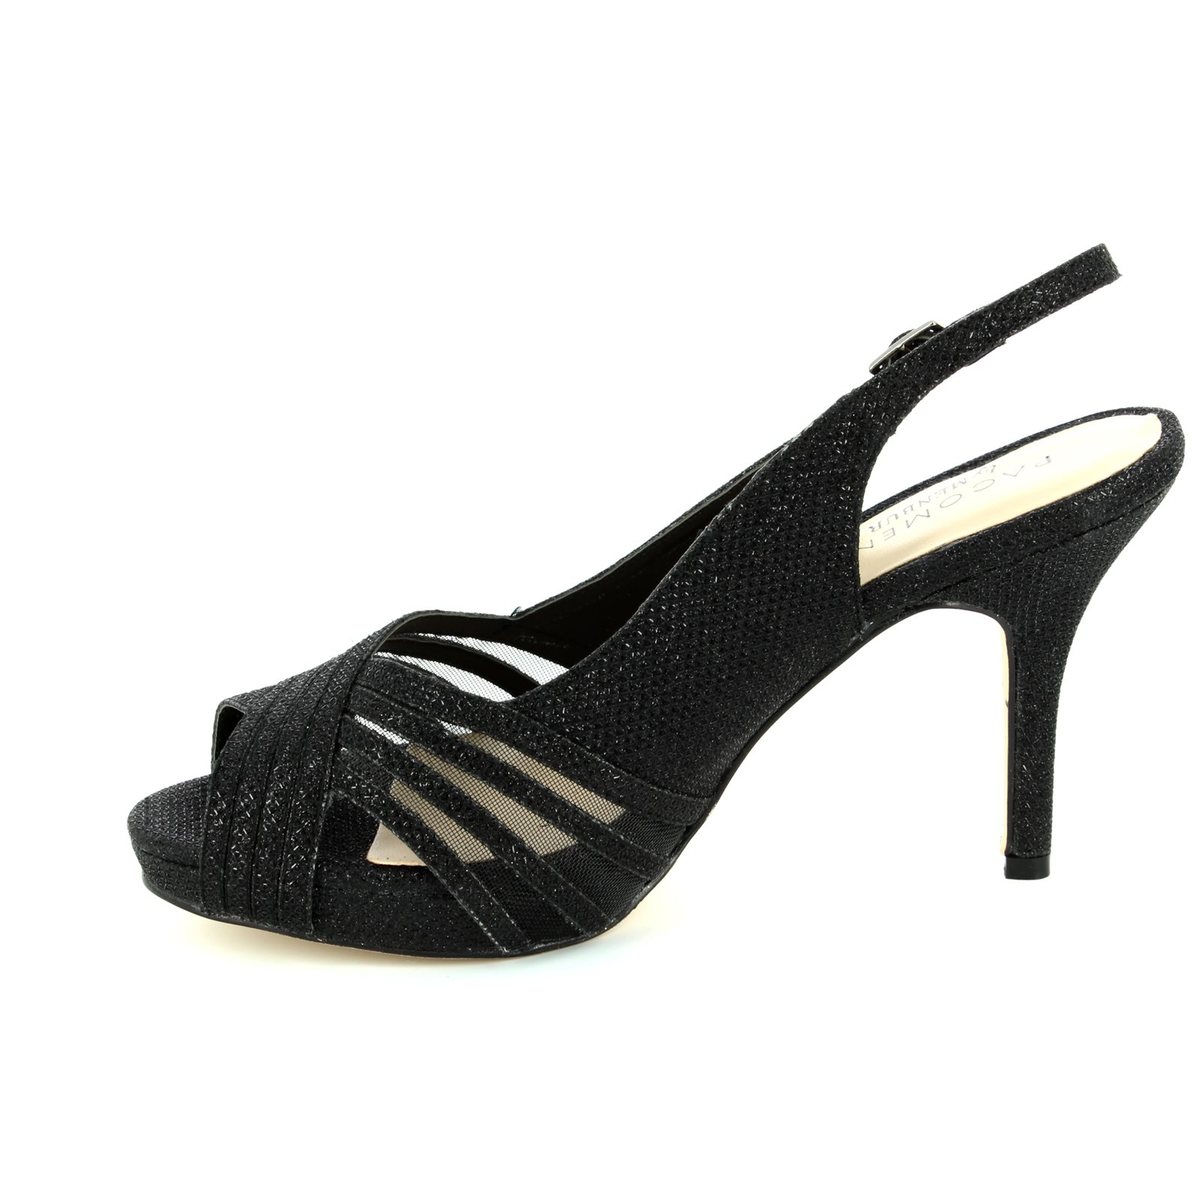 Menbur Singapur 07538-01 Black high-heeled shoes